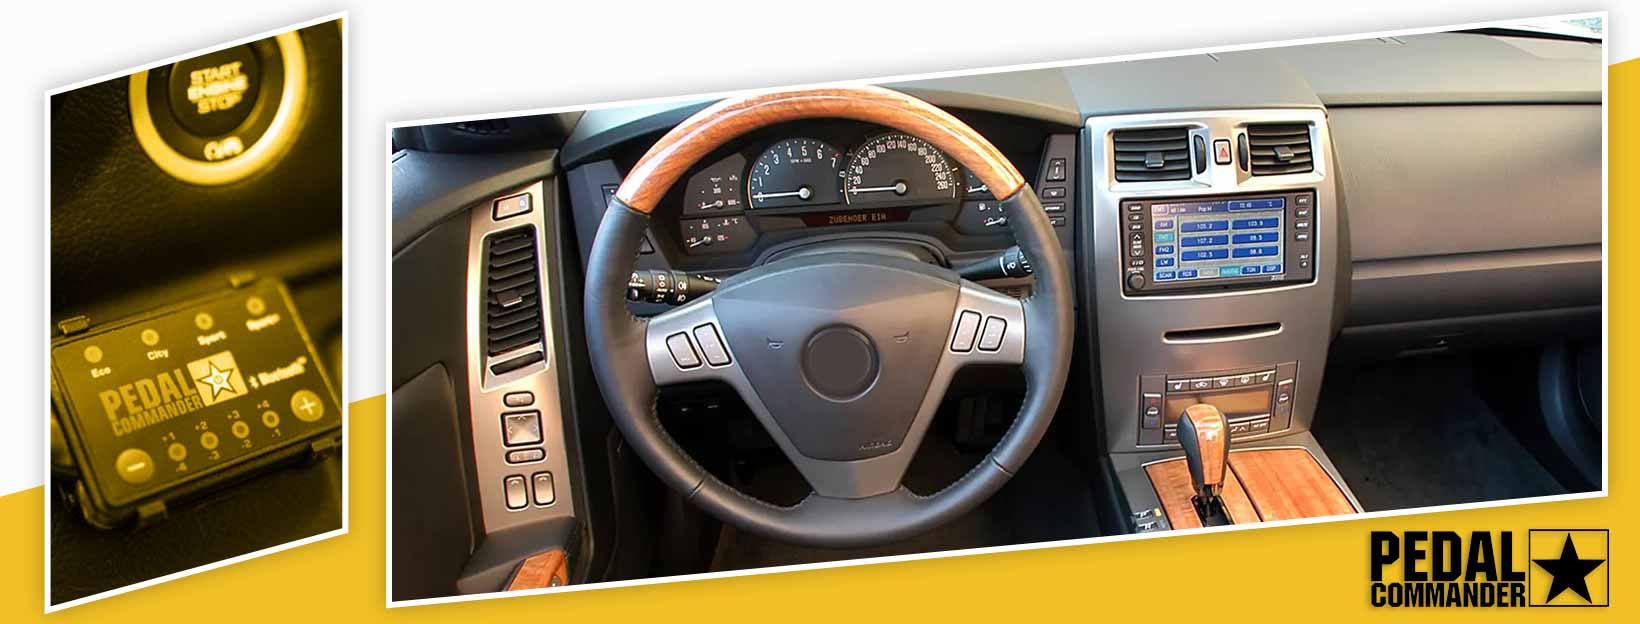 Pedal Commander for Cadillac XLR - interior